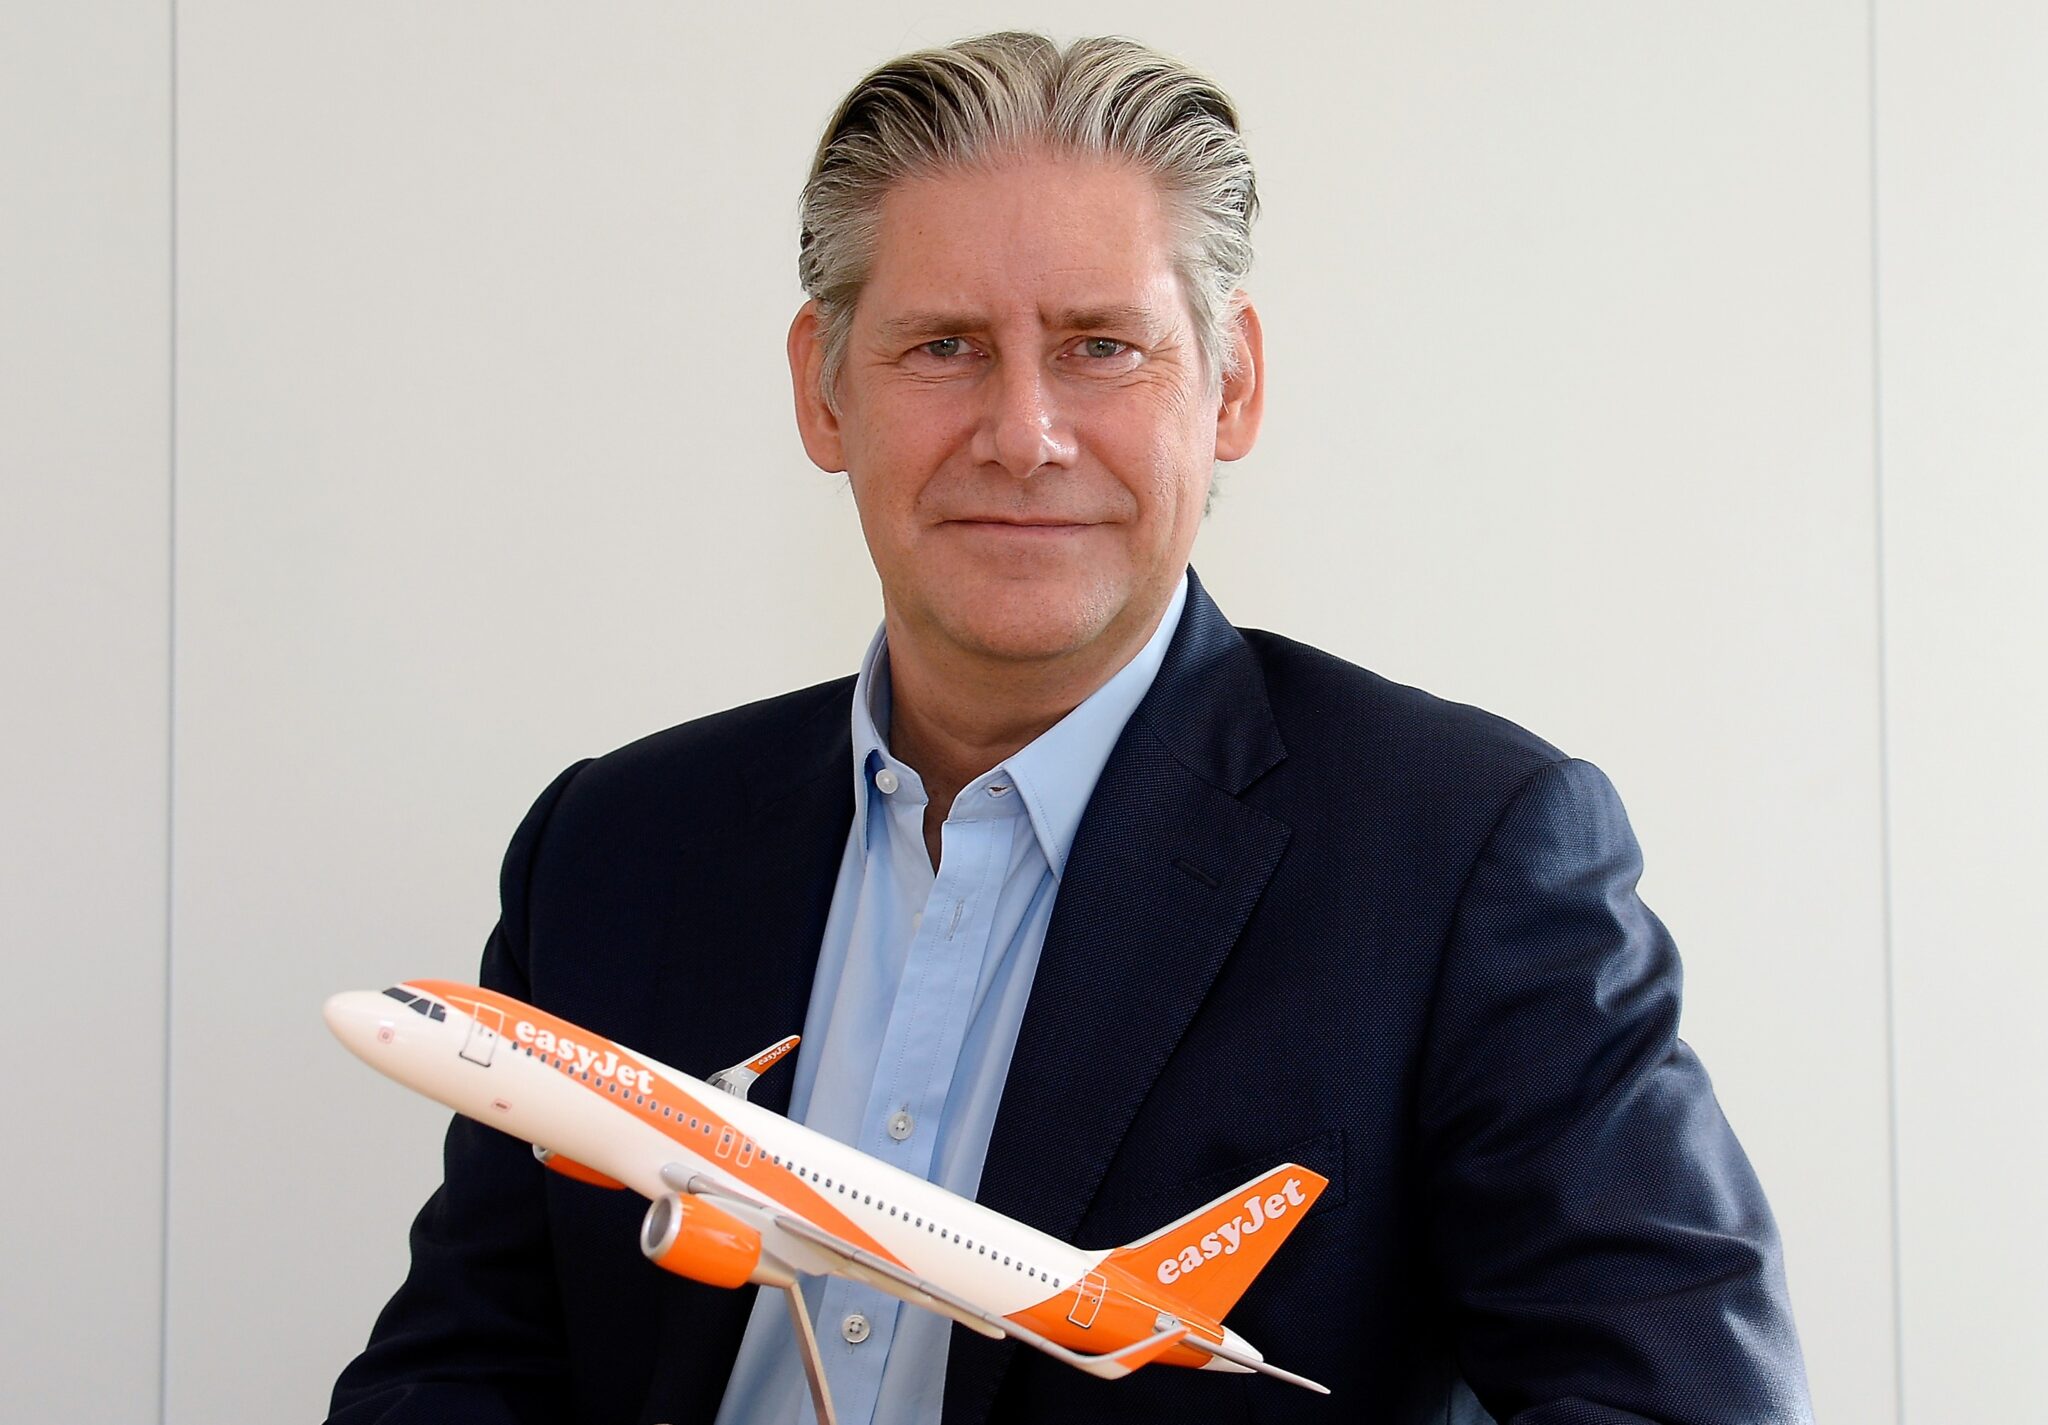 Johan Lundgren has been CEO of easyjet for seven years.